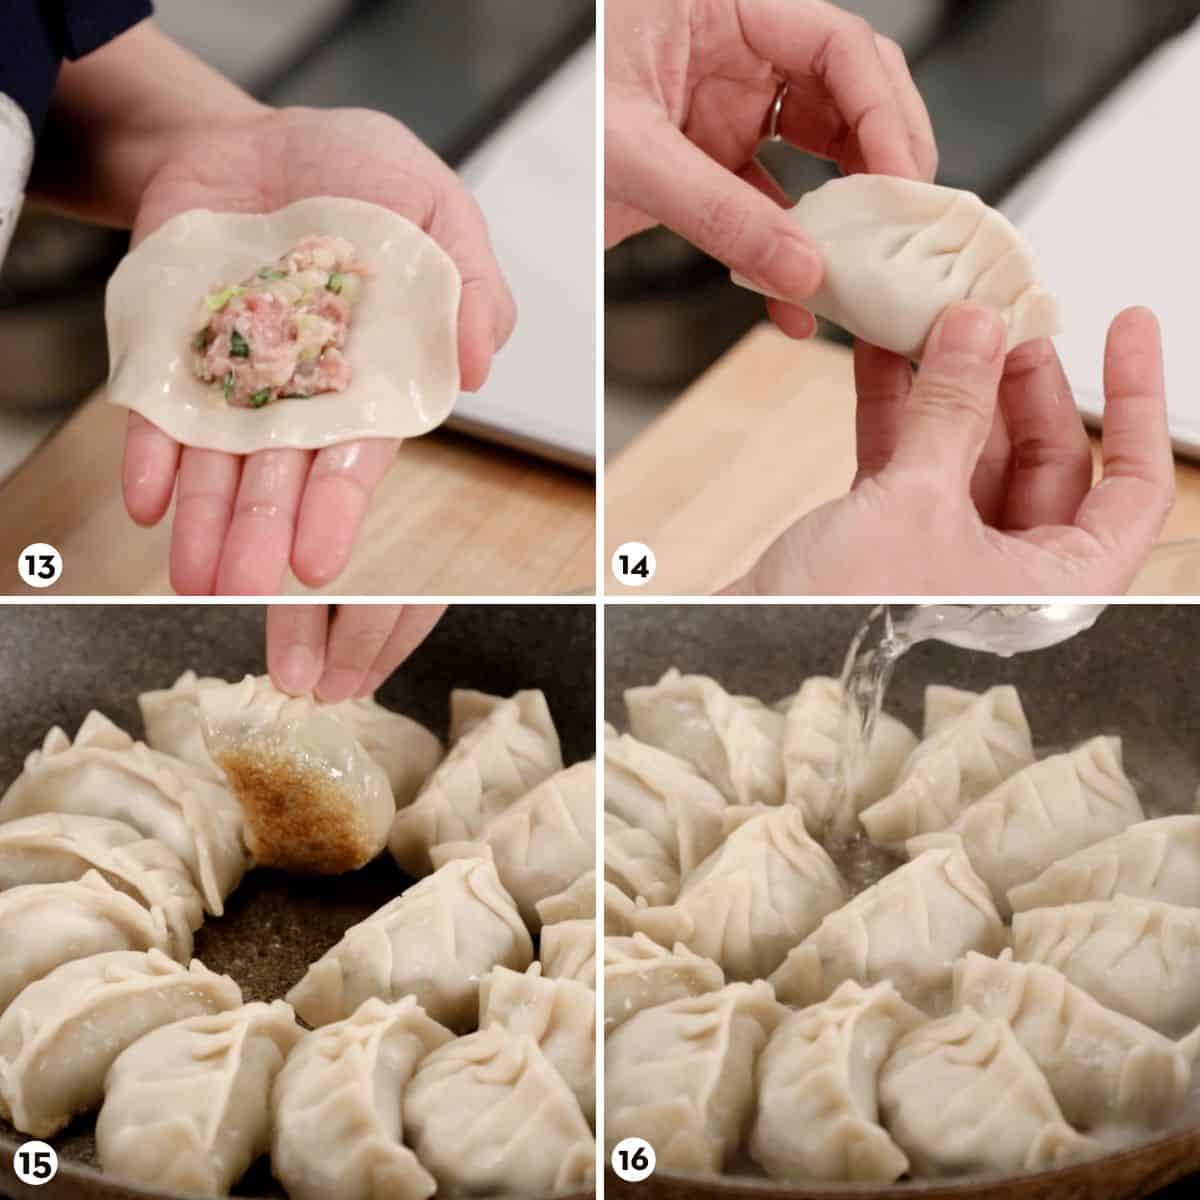 Process shots for making pork dumplings steps 13-16